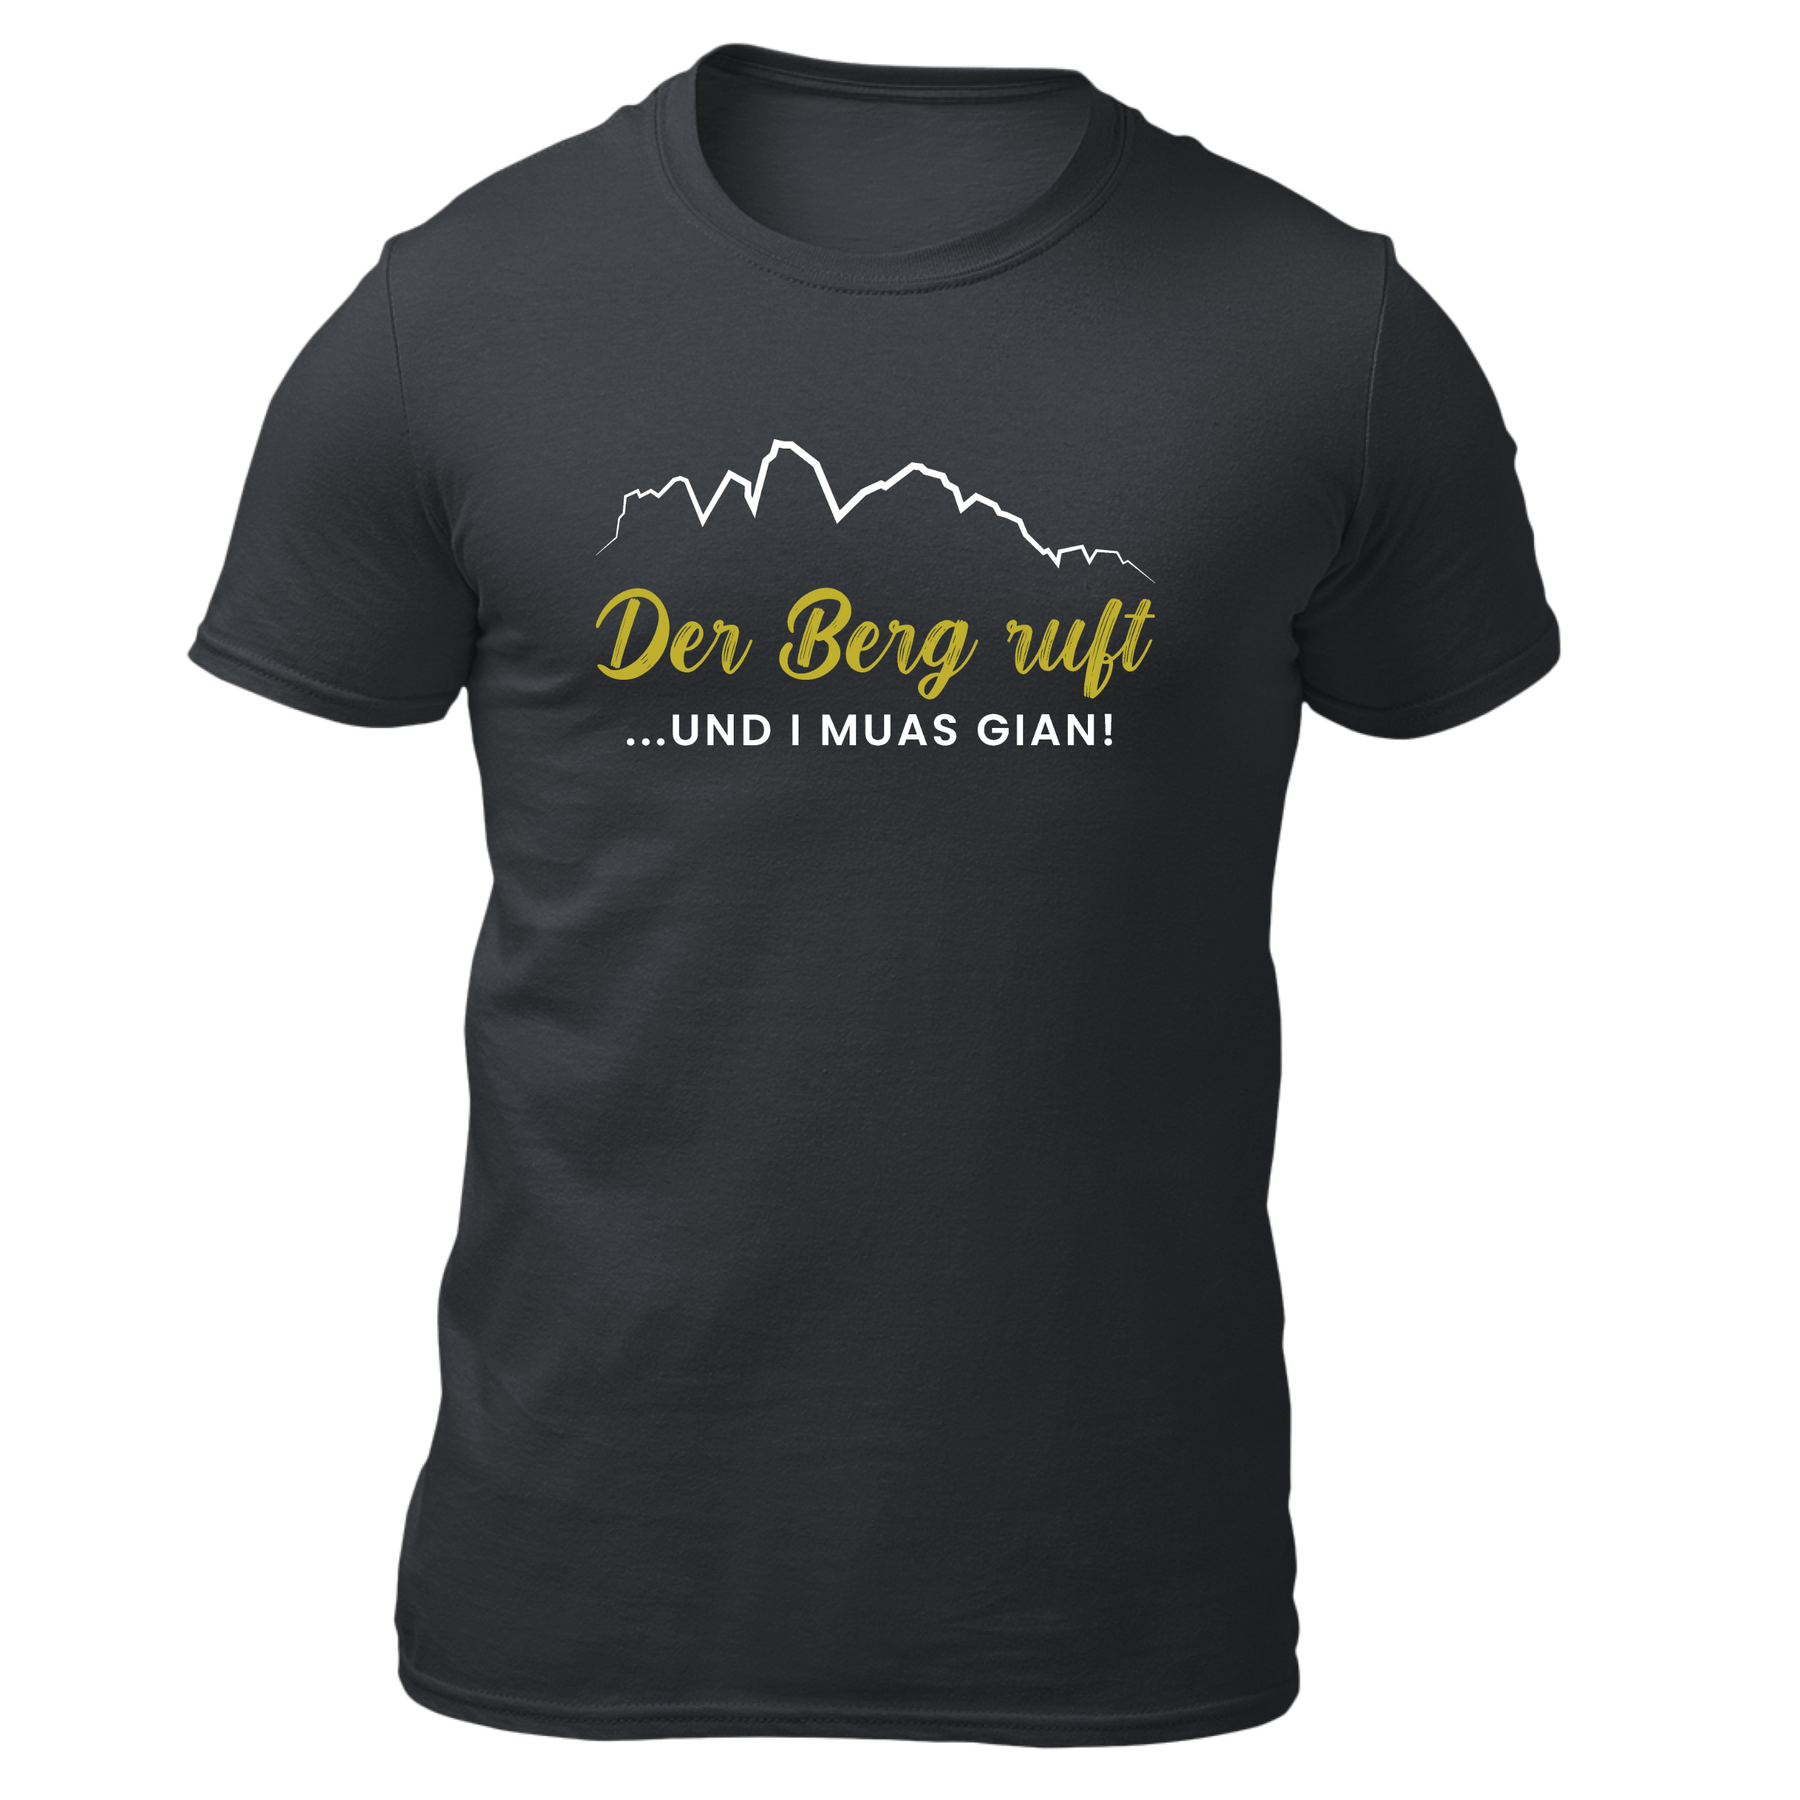 Der Berg ruft und i muas gian! - Herren Shirt Bio - Grau / S - Shirts & Tops